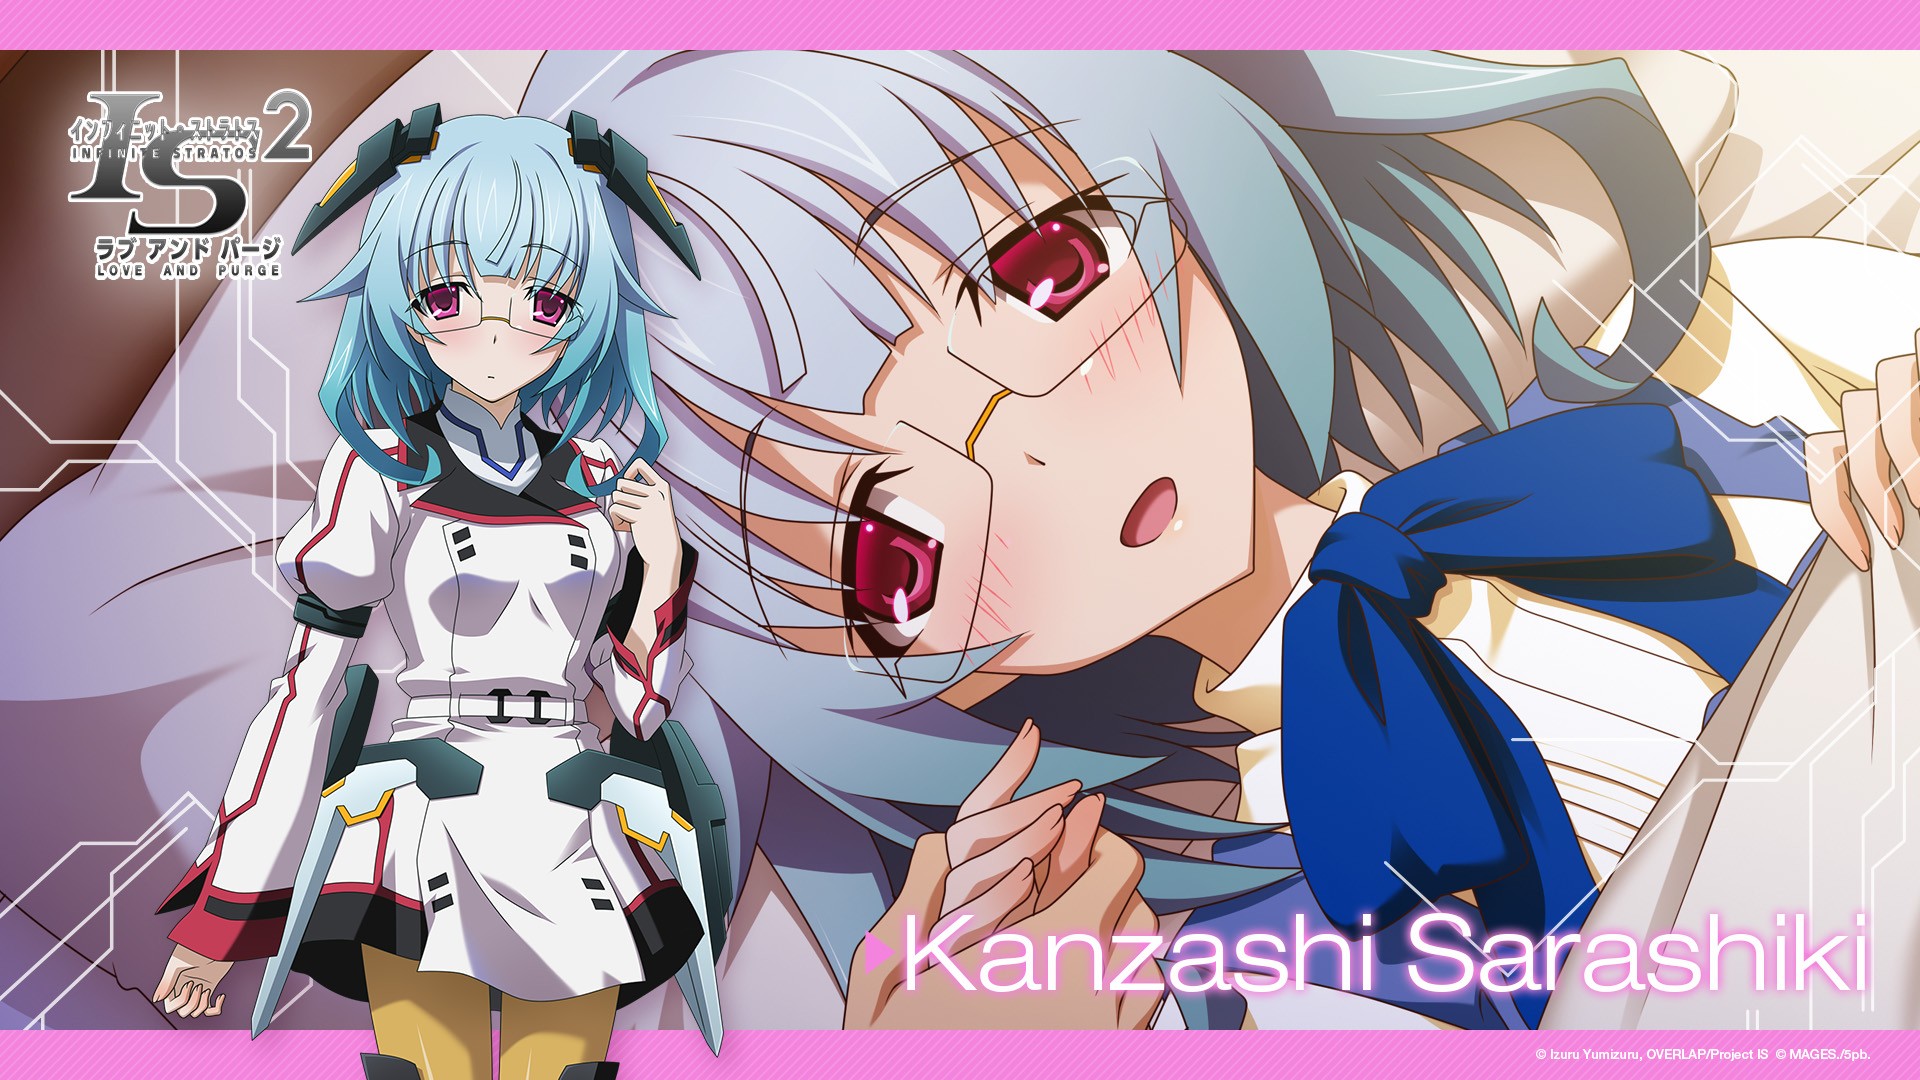 Anime 1920x1080 anime anime girls Infinite Stratos school uniform Sarashiki Kanzashi glasses blue hair meganekko cyan hair women with glasses